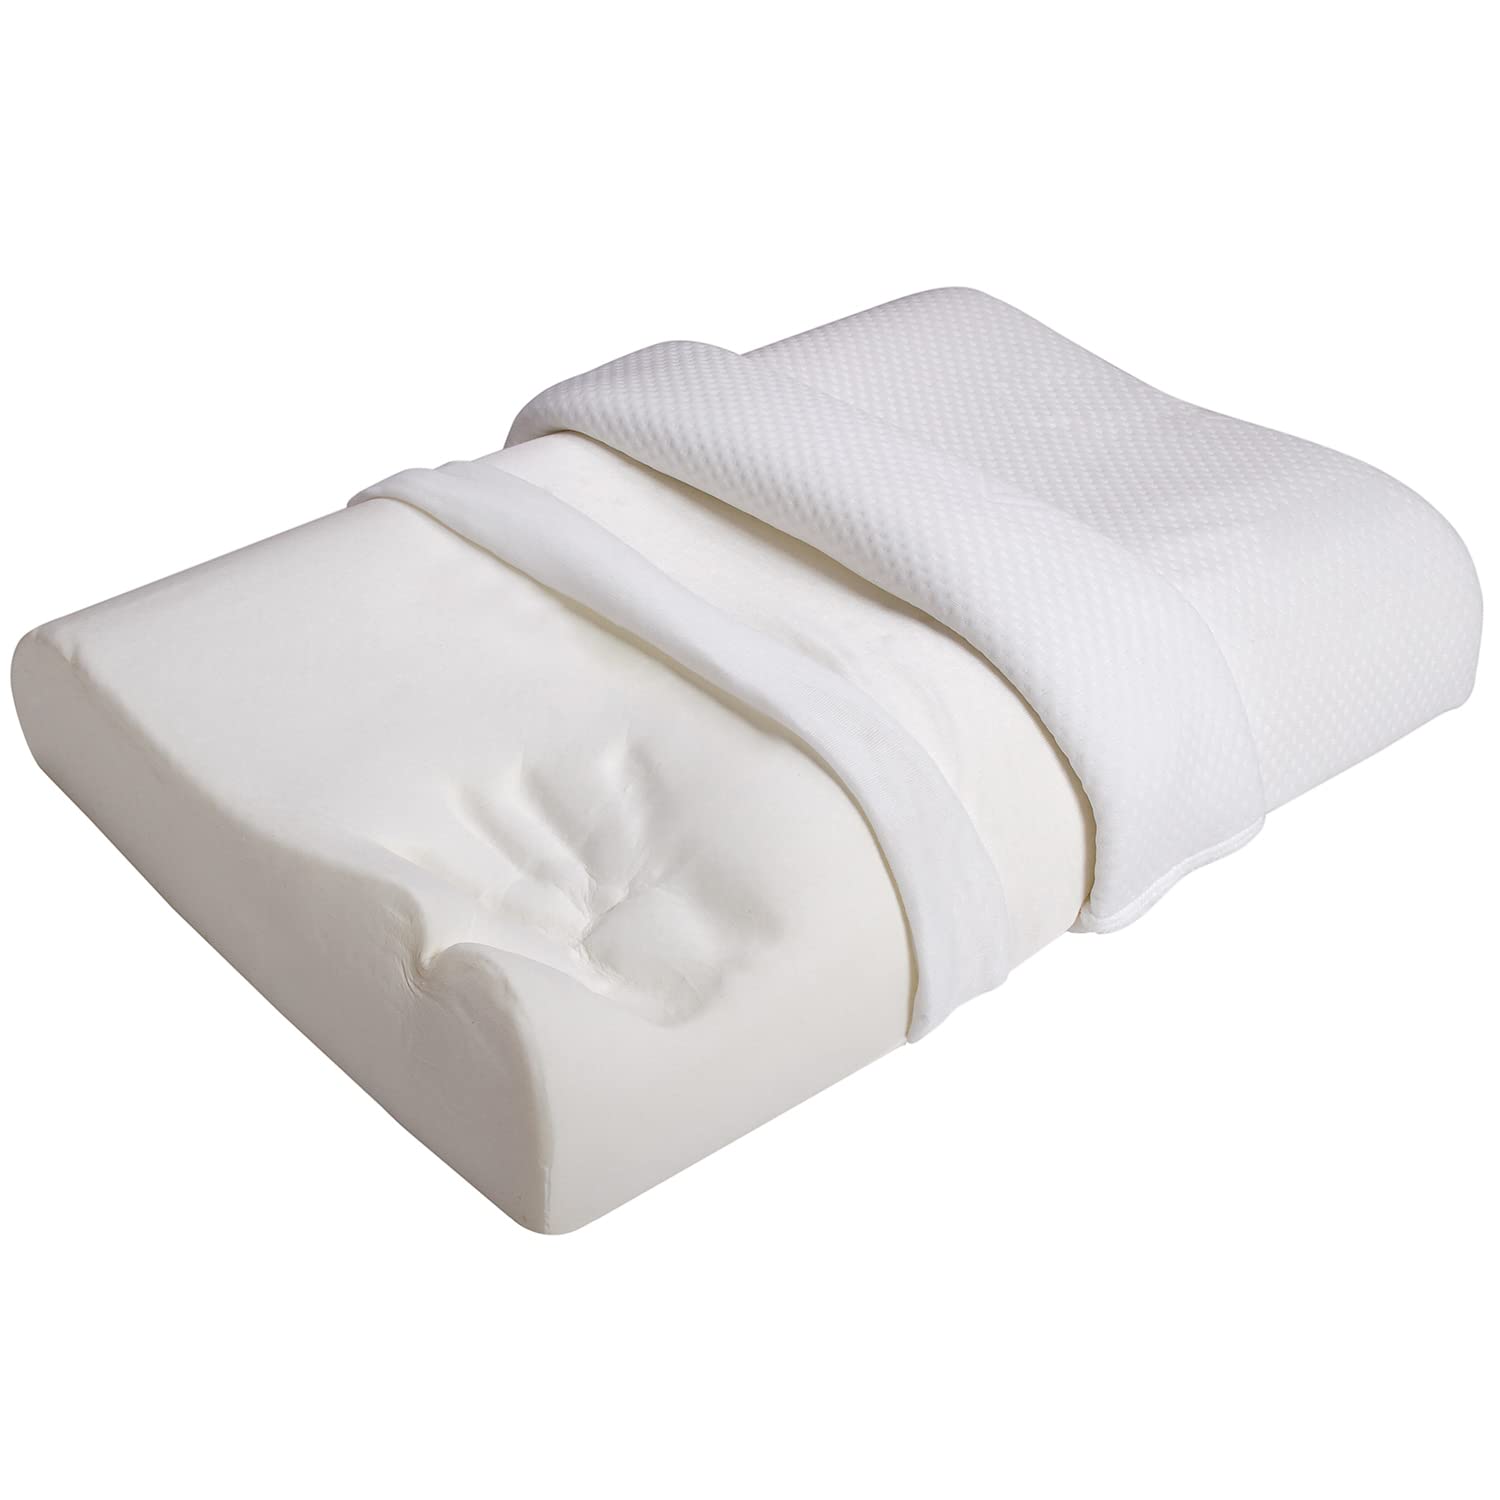 Sleepsia Orthopedic Cervical Pillow